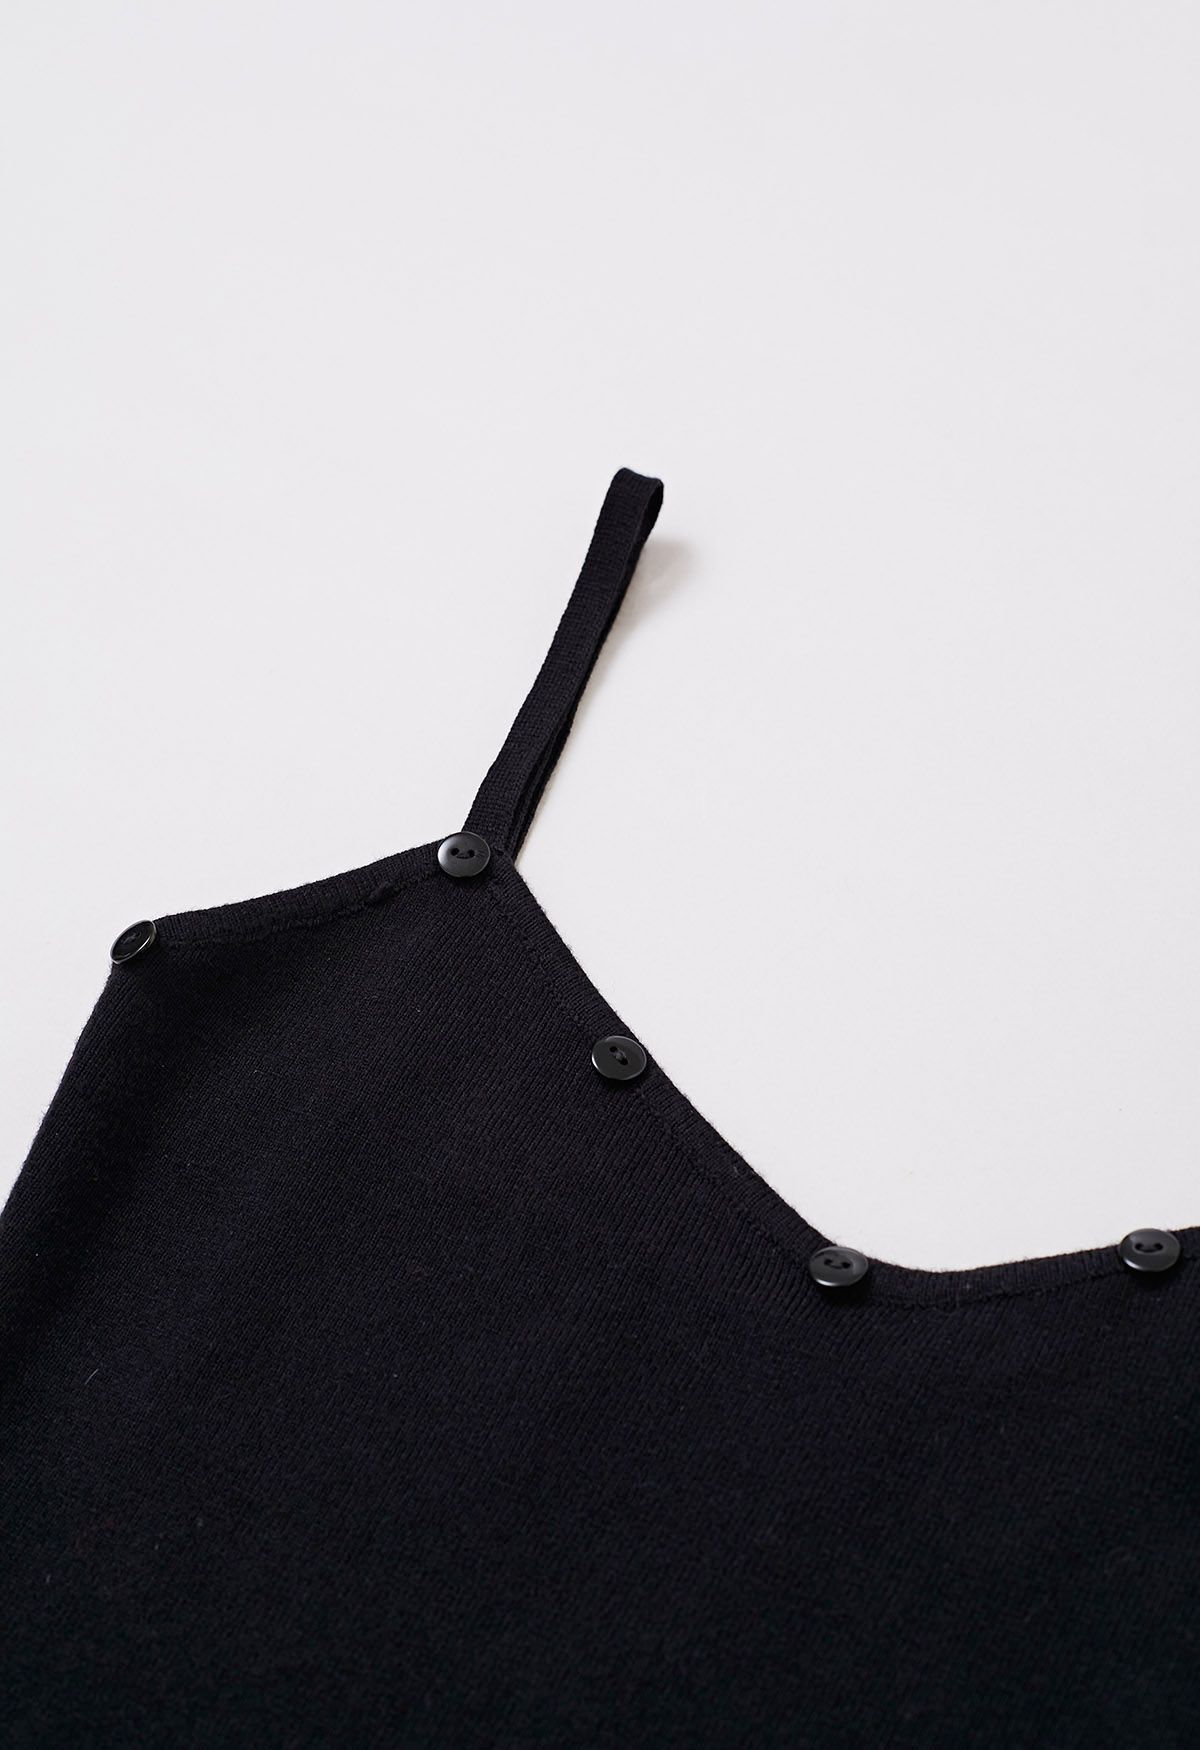 Detachable Feather Trim Knit Cami Dress in Black